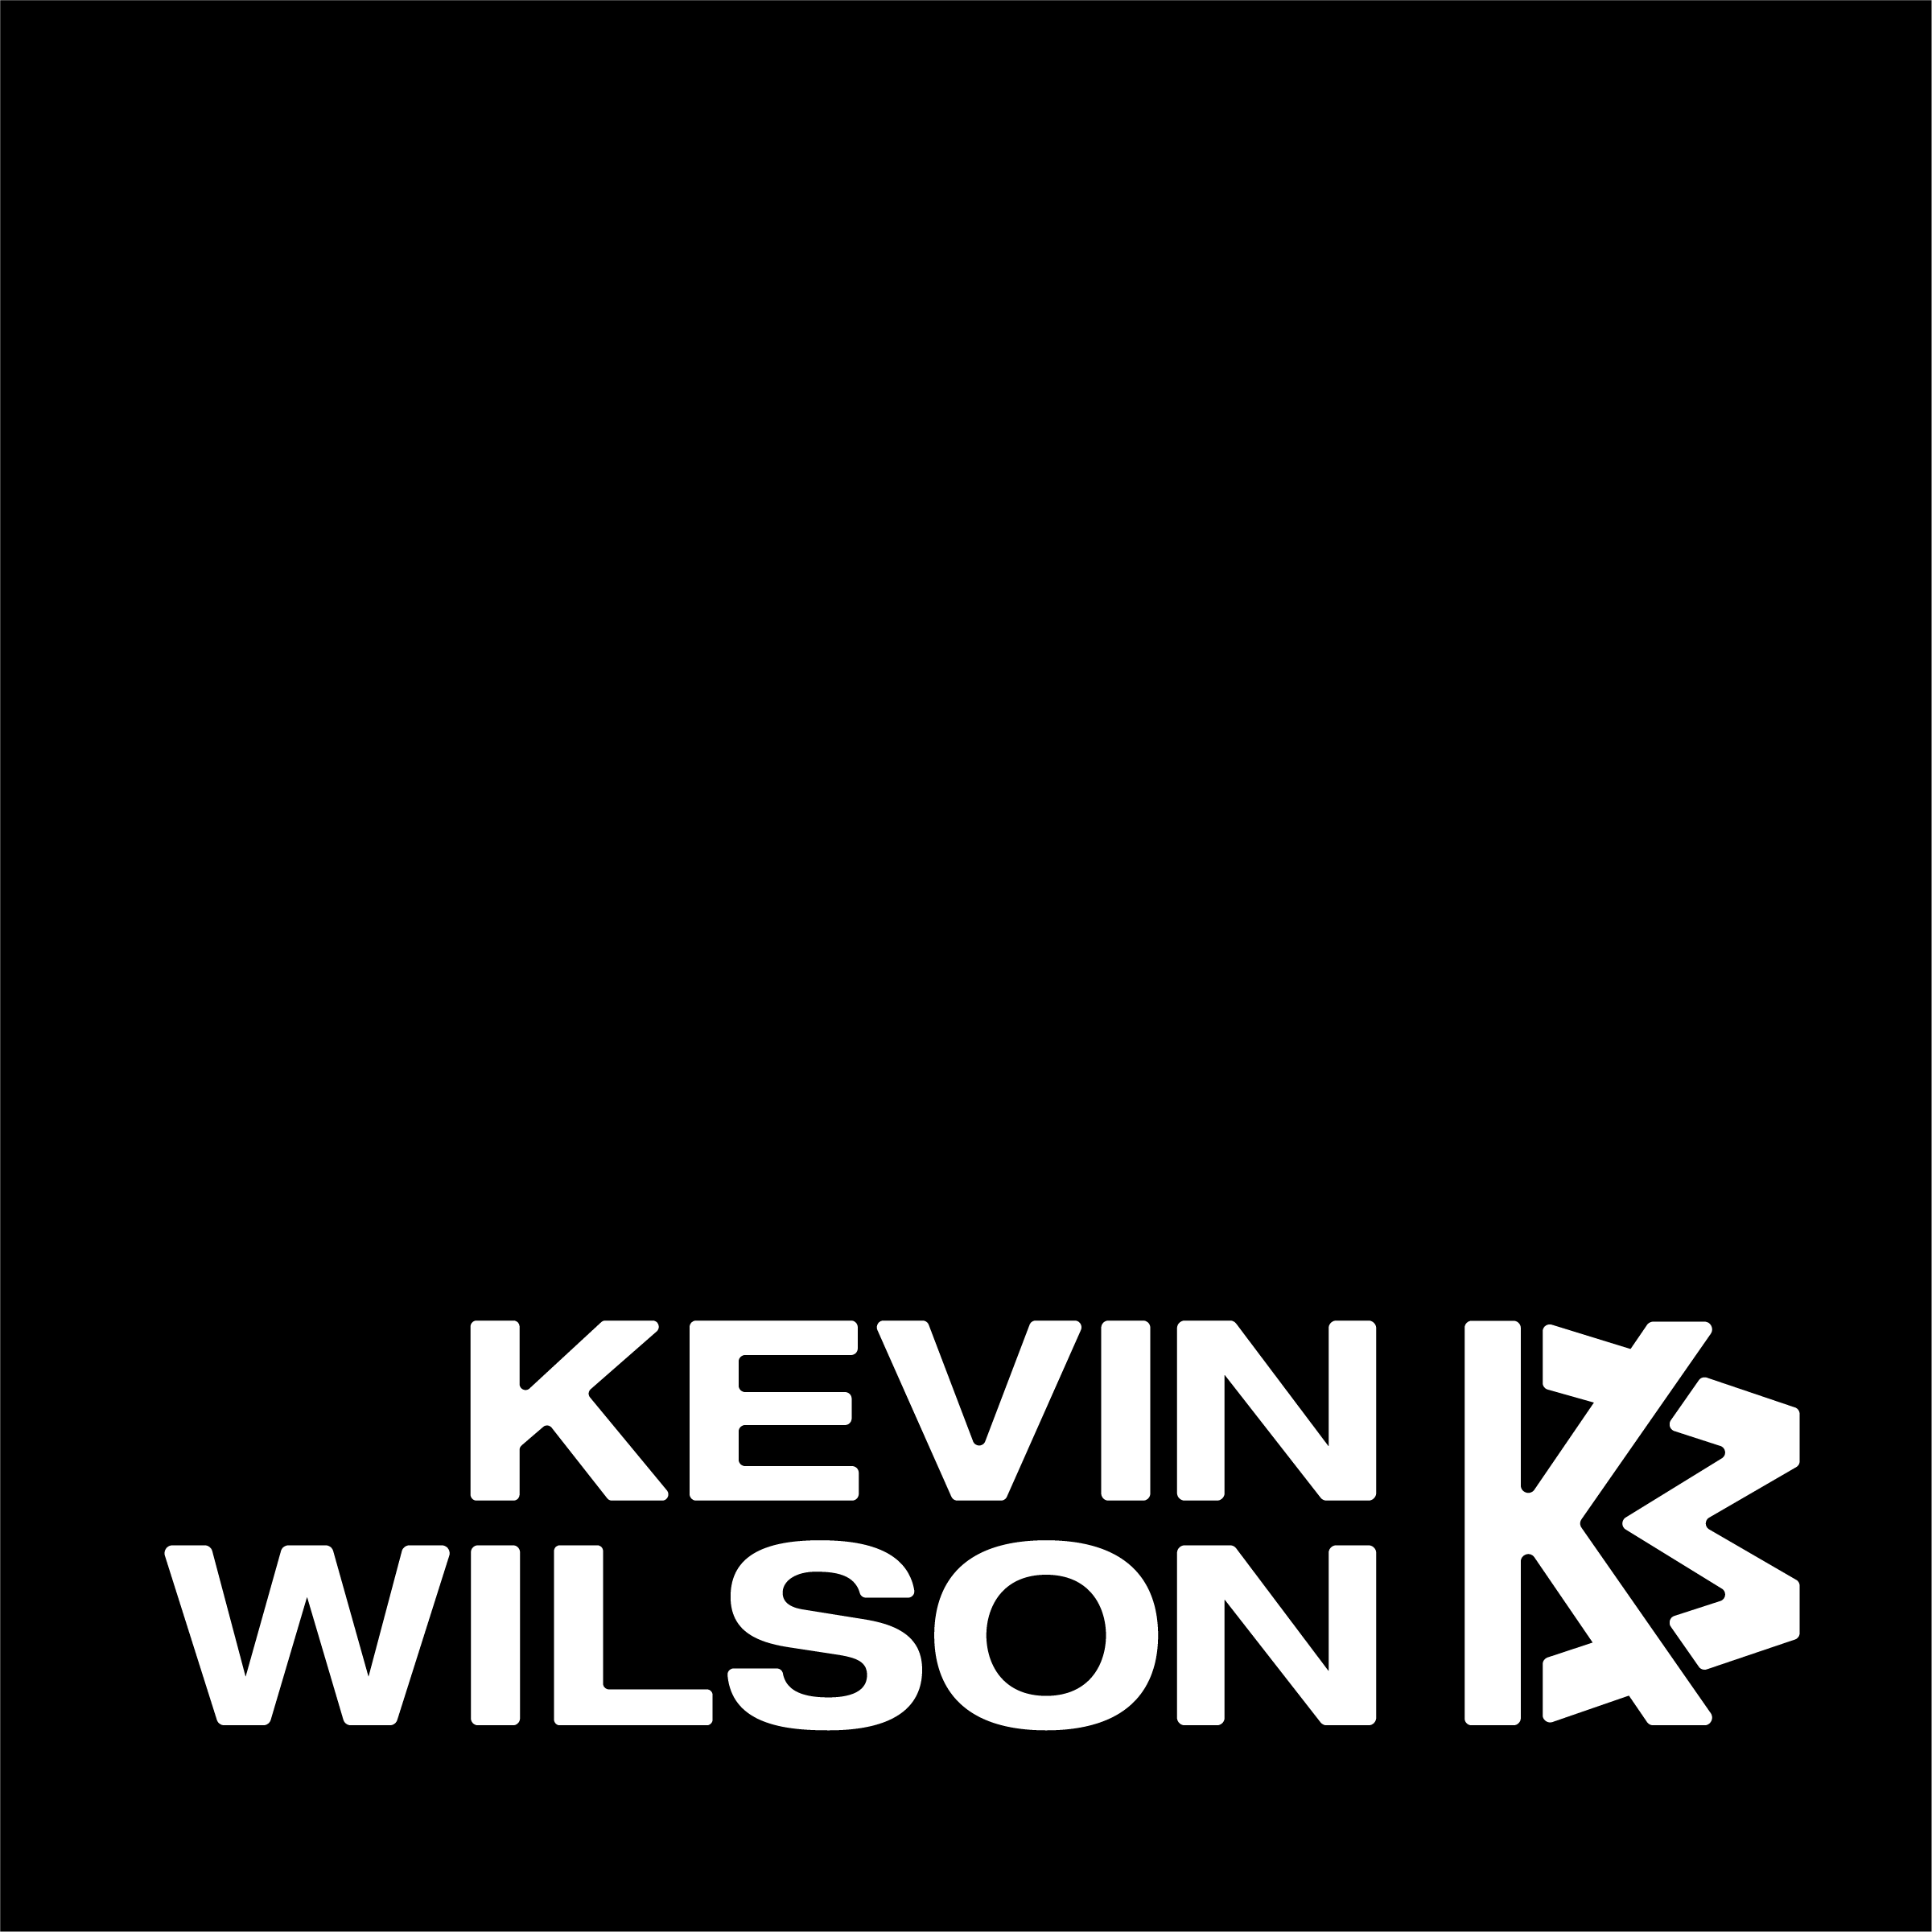 Kevin Wilson Design